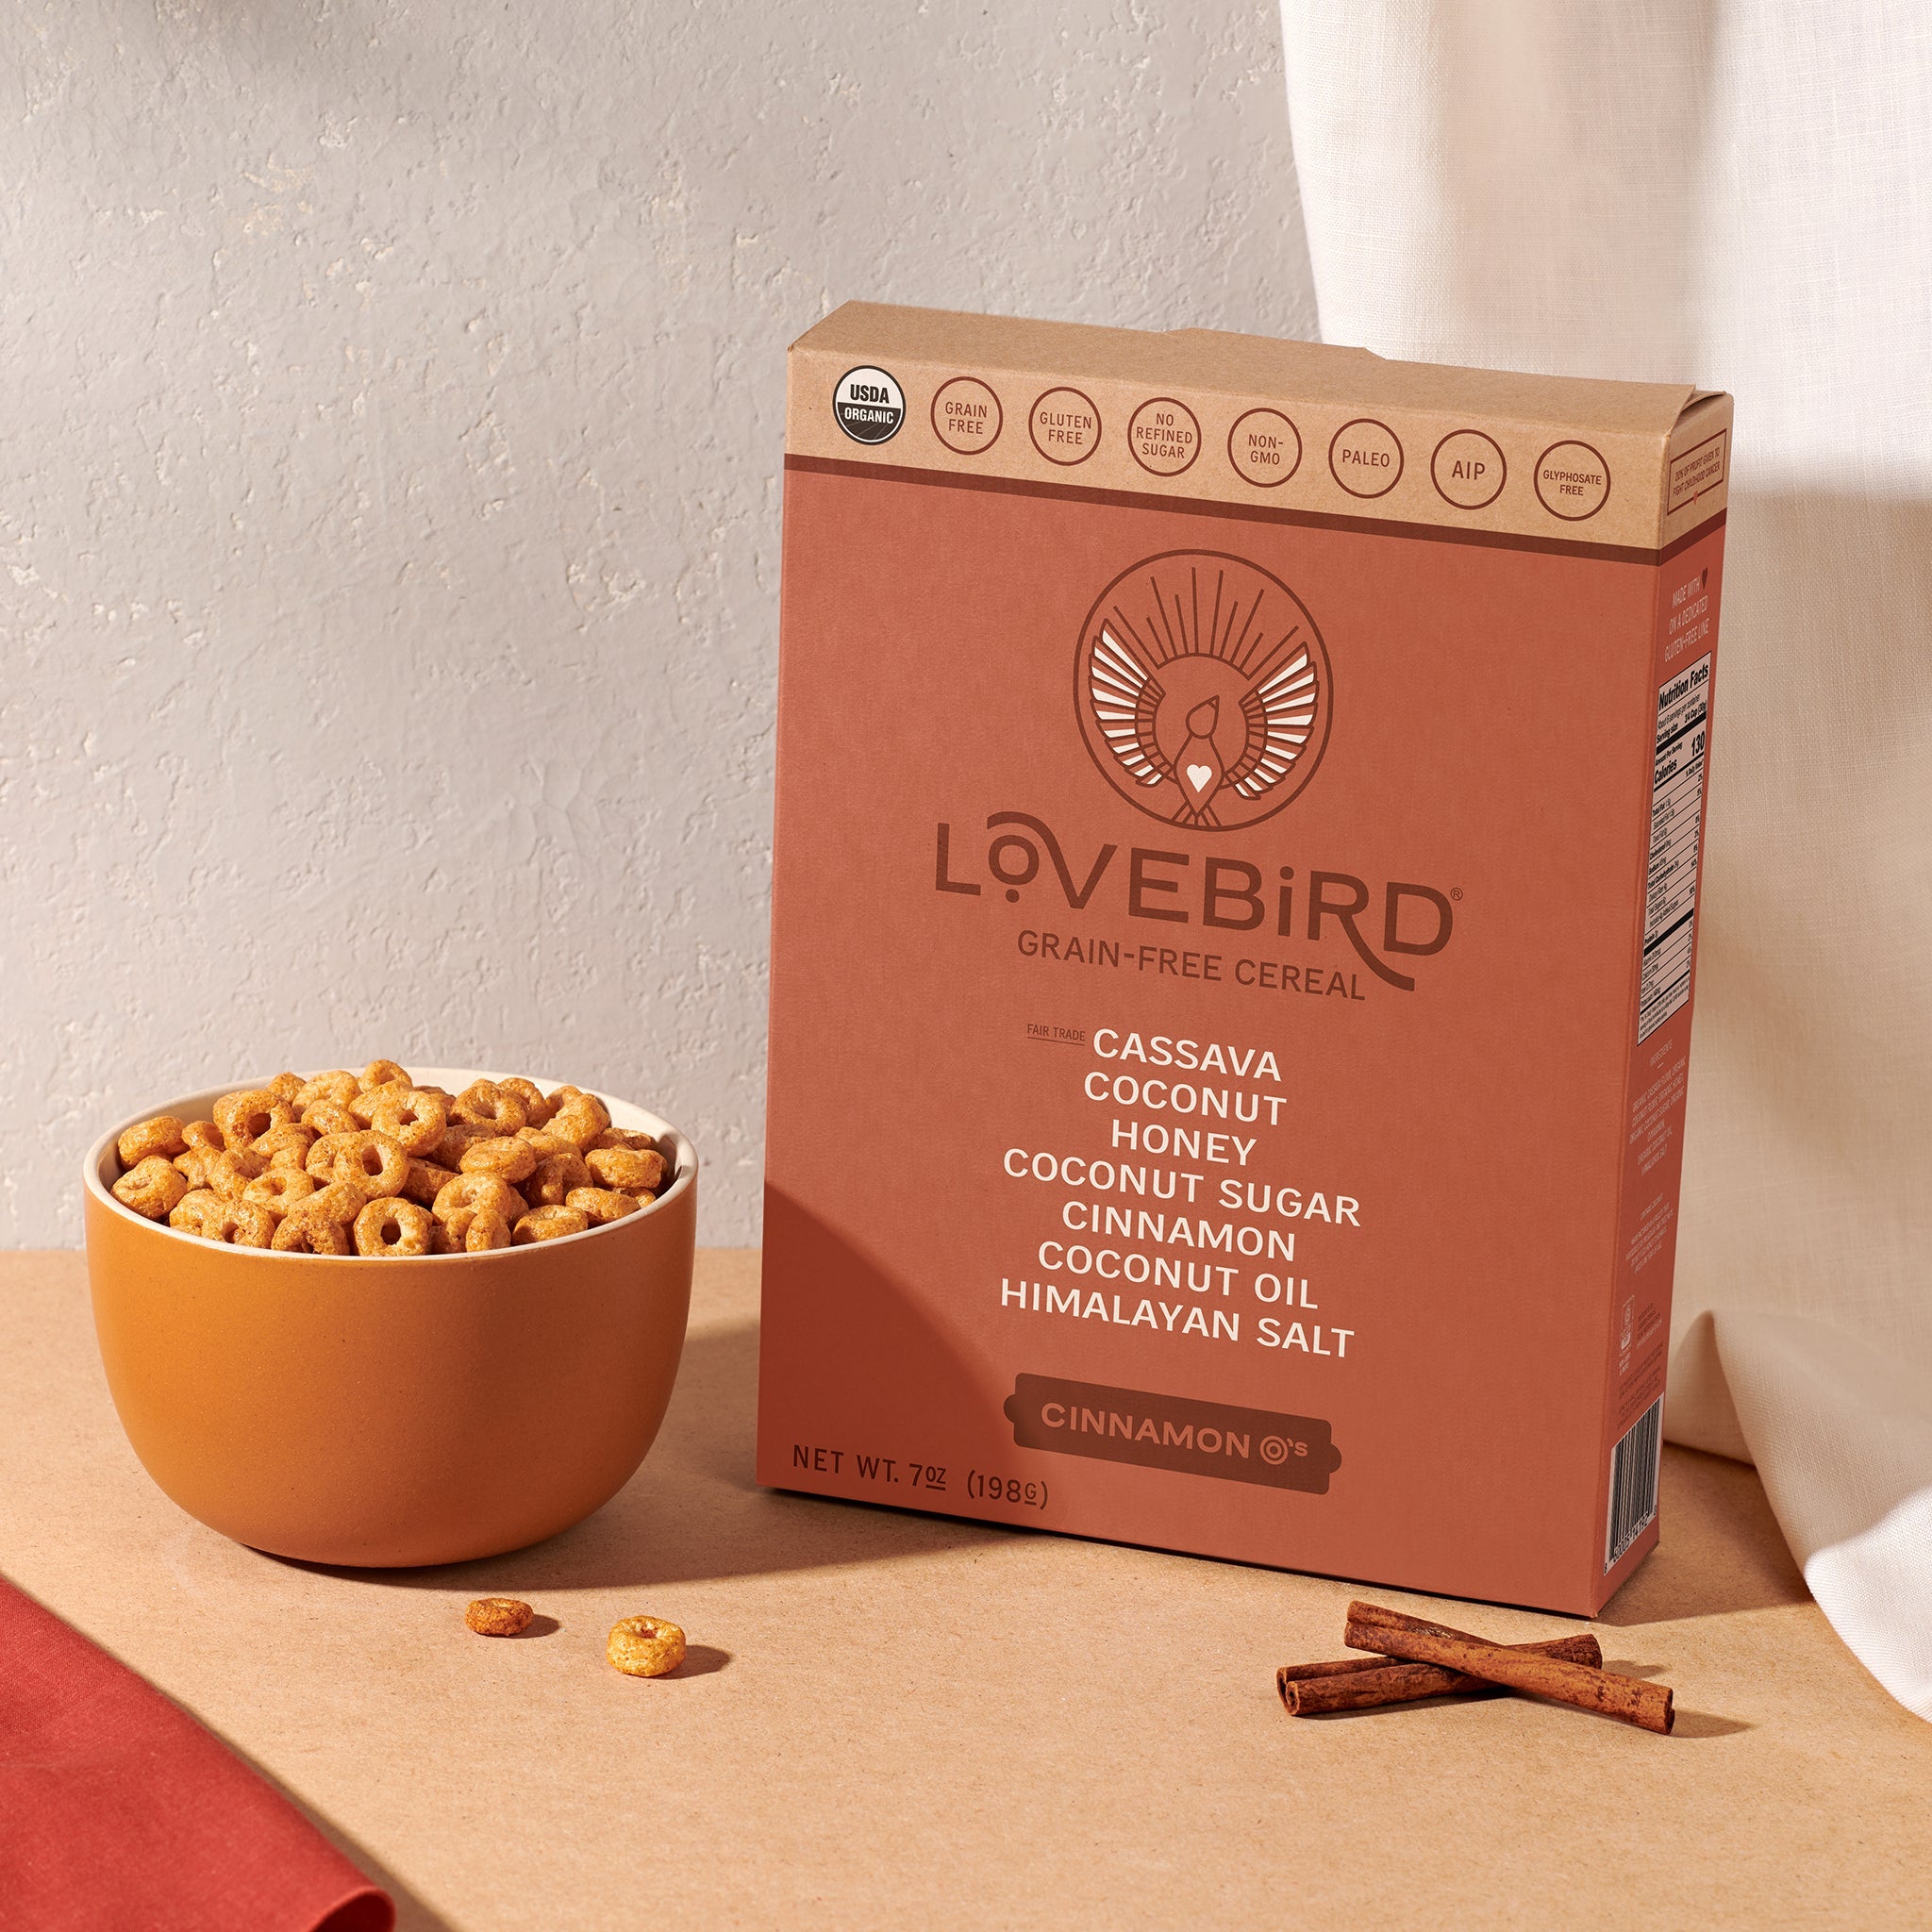 Lovebird Cereal Flavor Pack